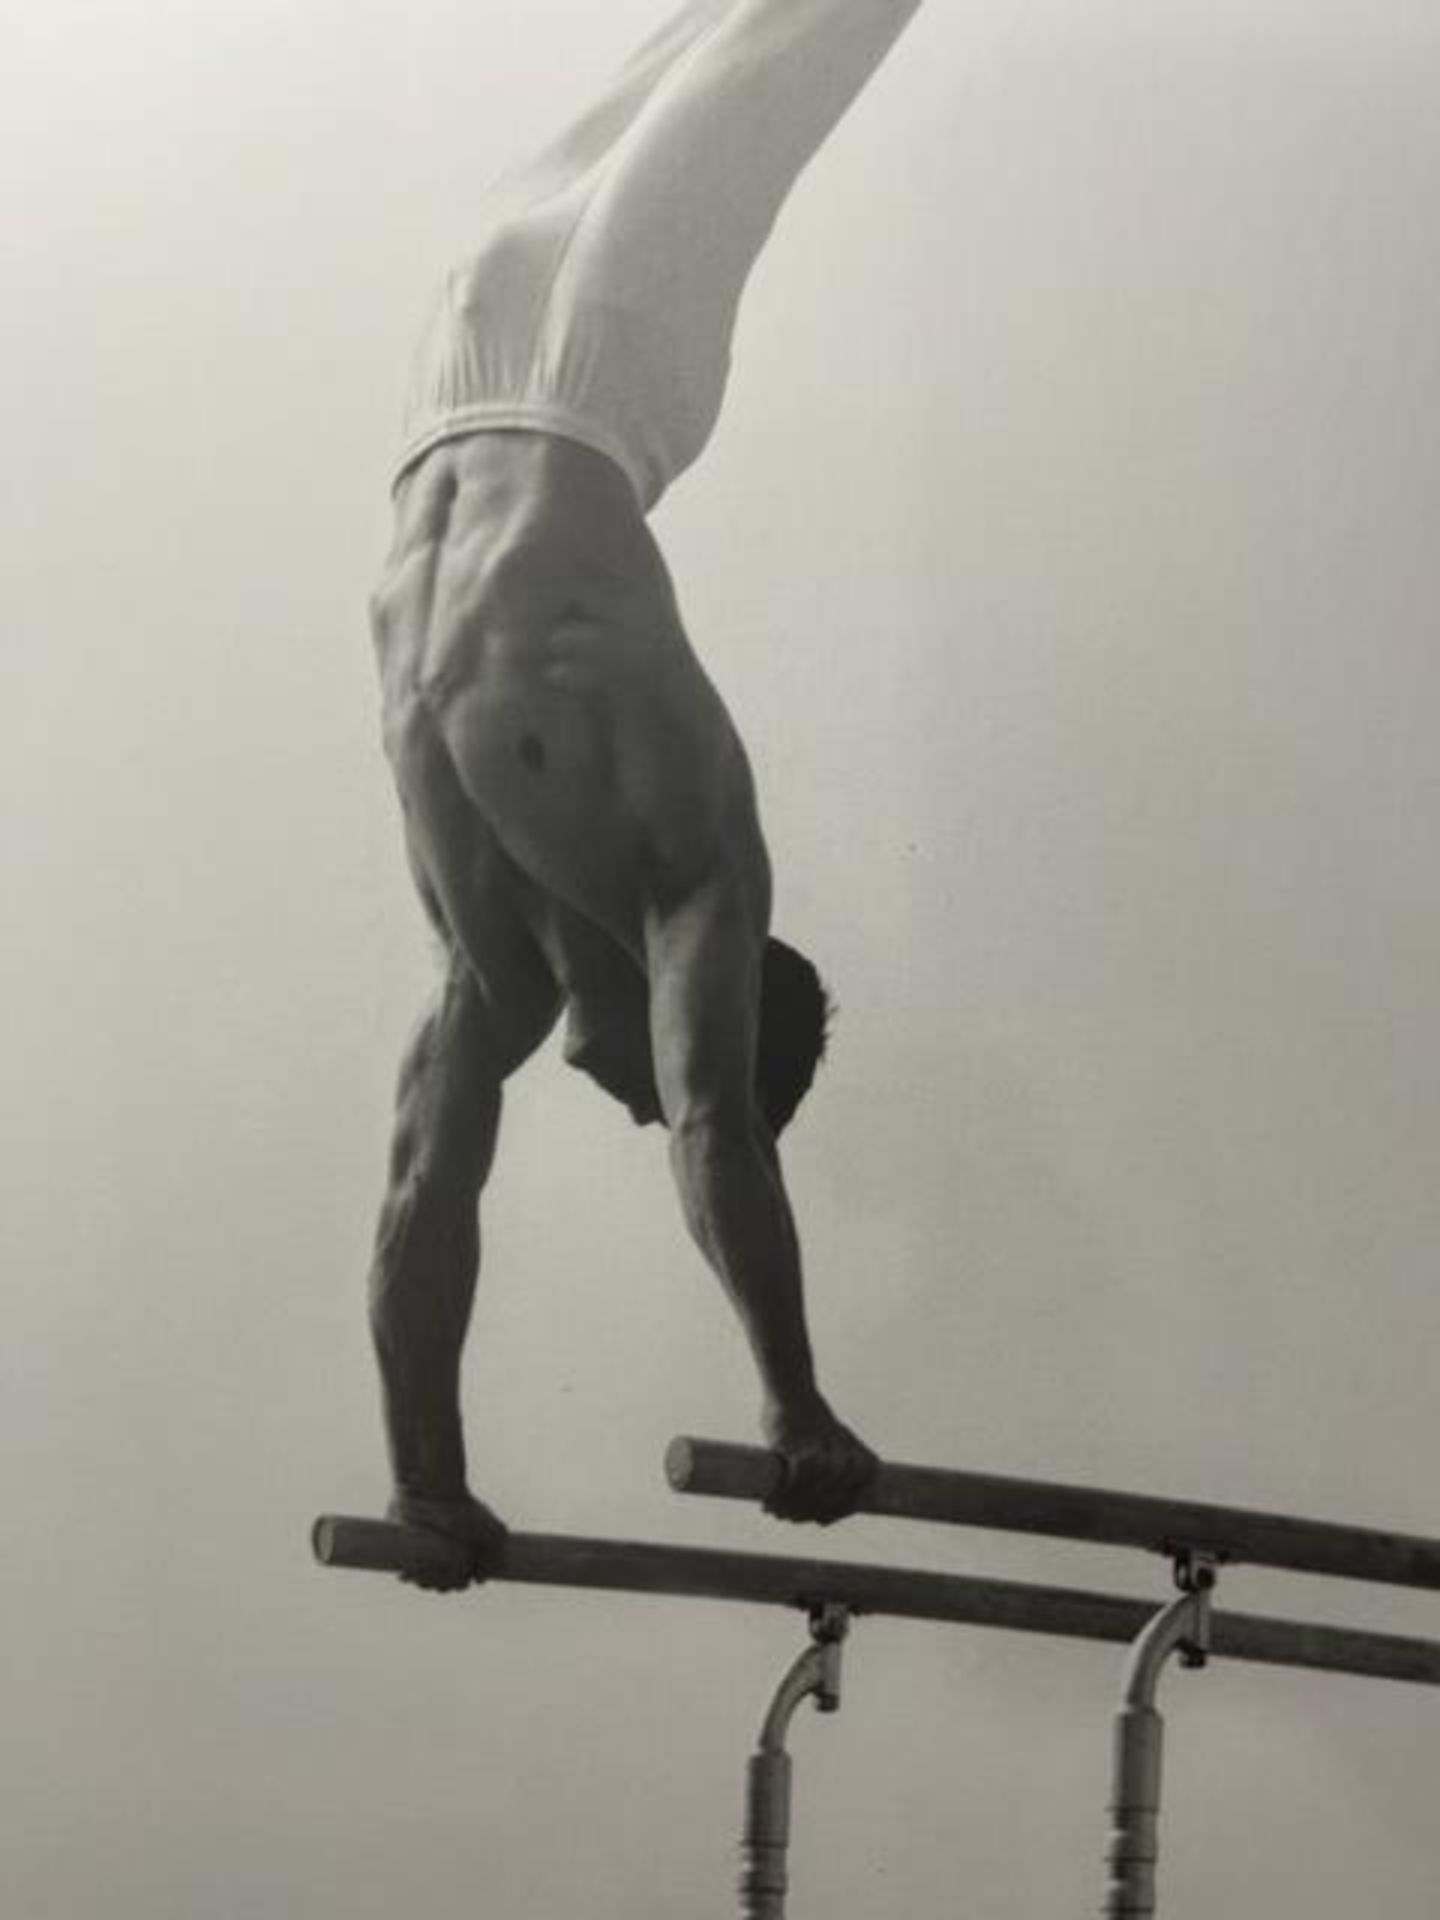 Annie Leibovitz "Untitled" Print. - Image 4 of 6